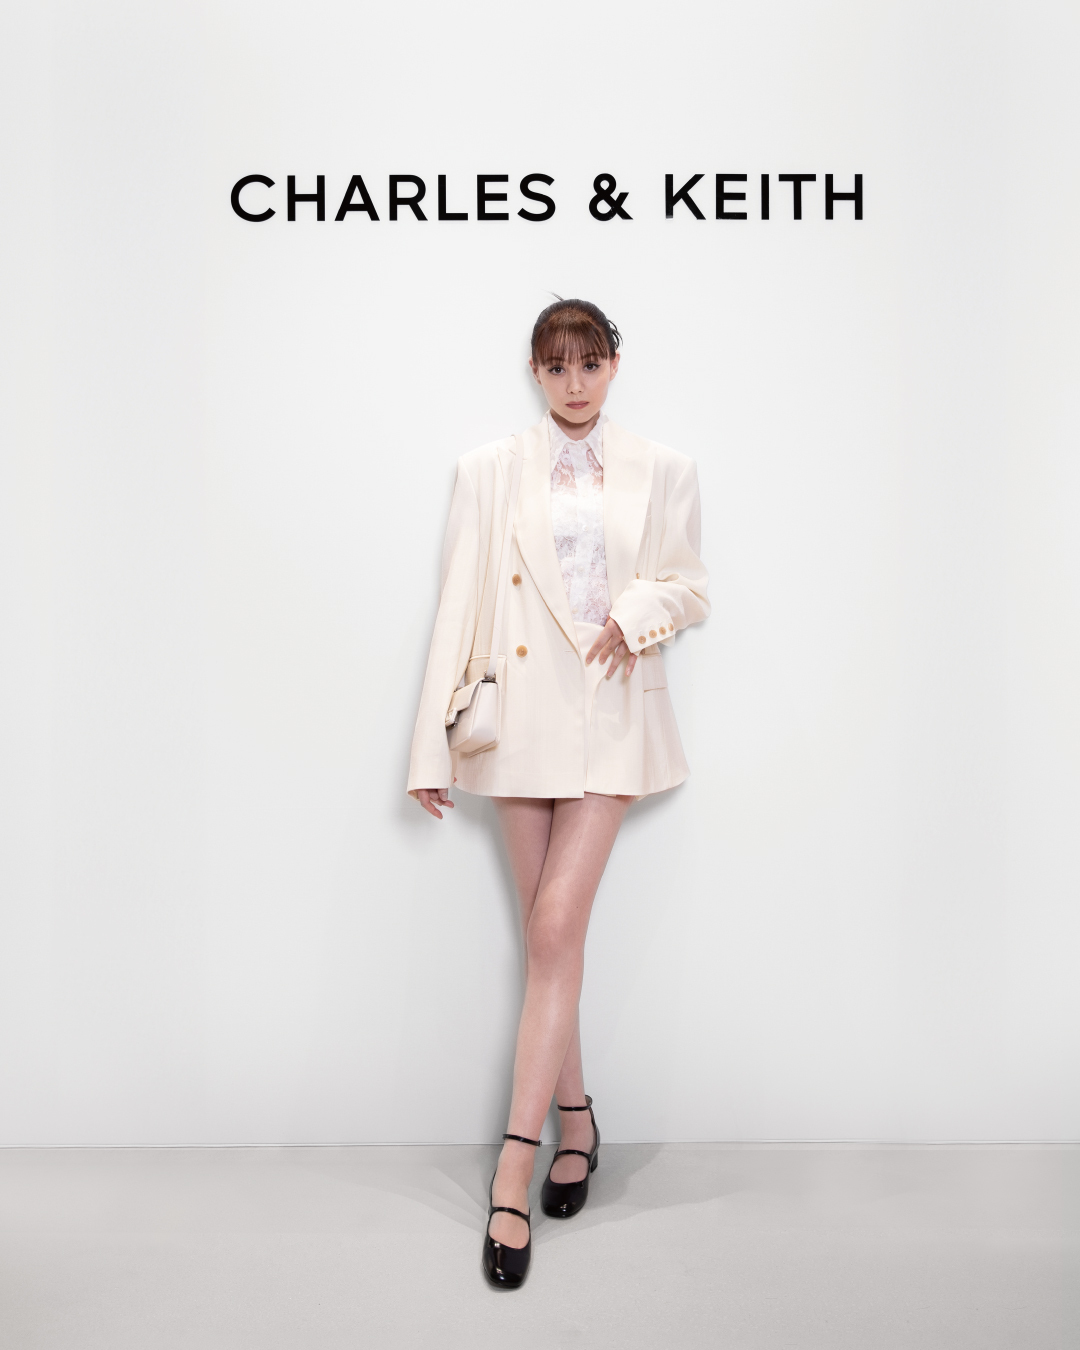 Charles & Keith Shibuya Store item image チャールズアンドキース 渋谷店 限定 新作 バッグ シューズ